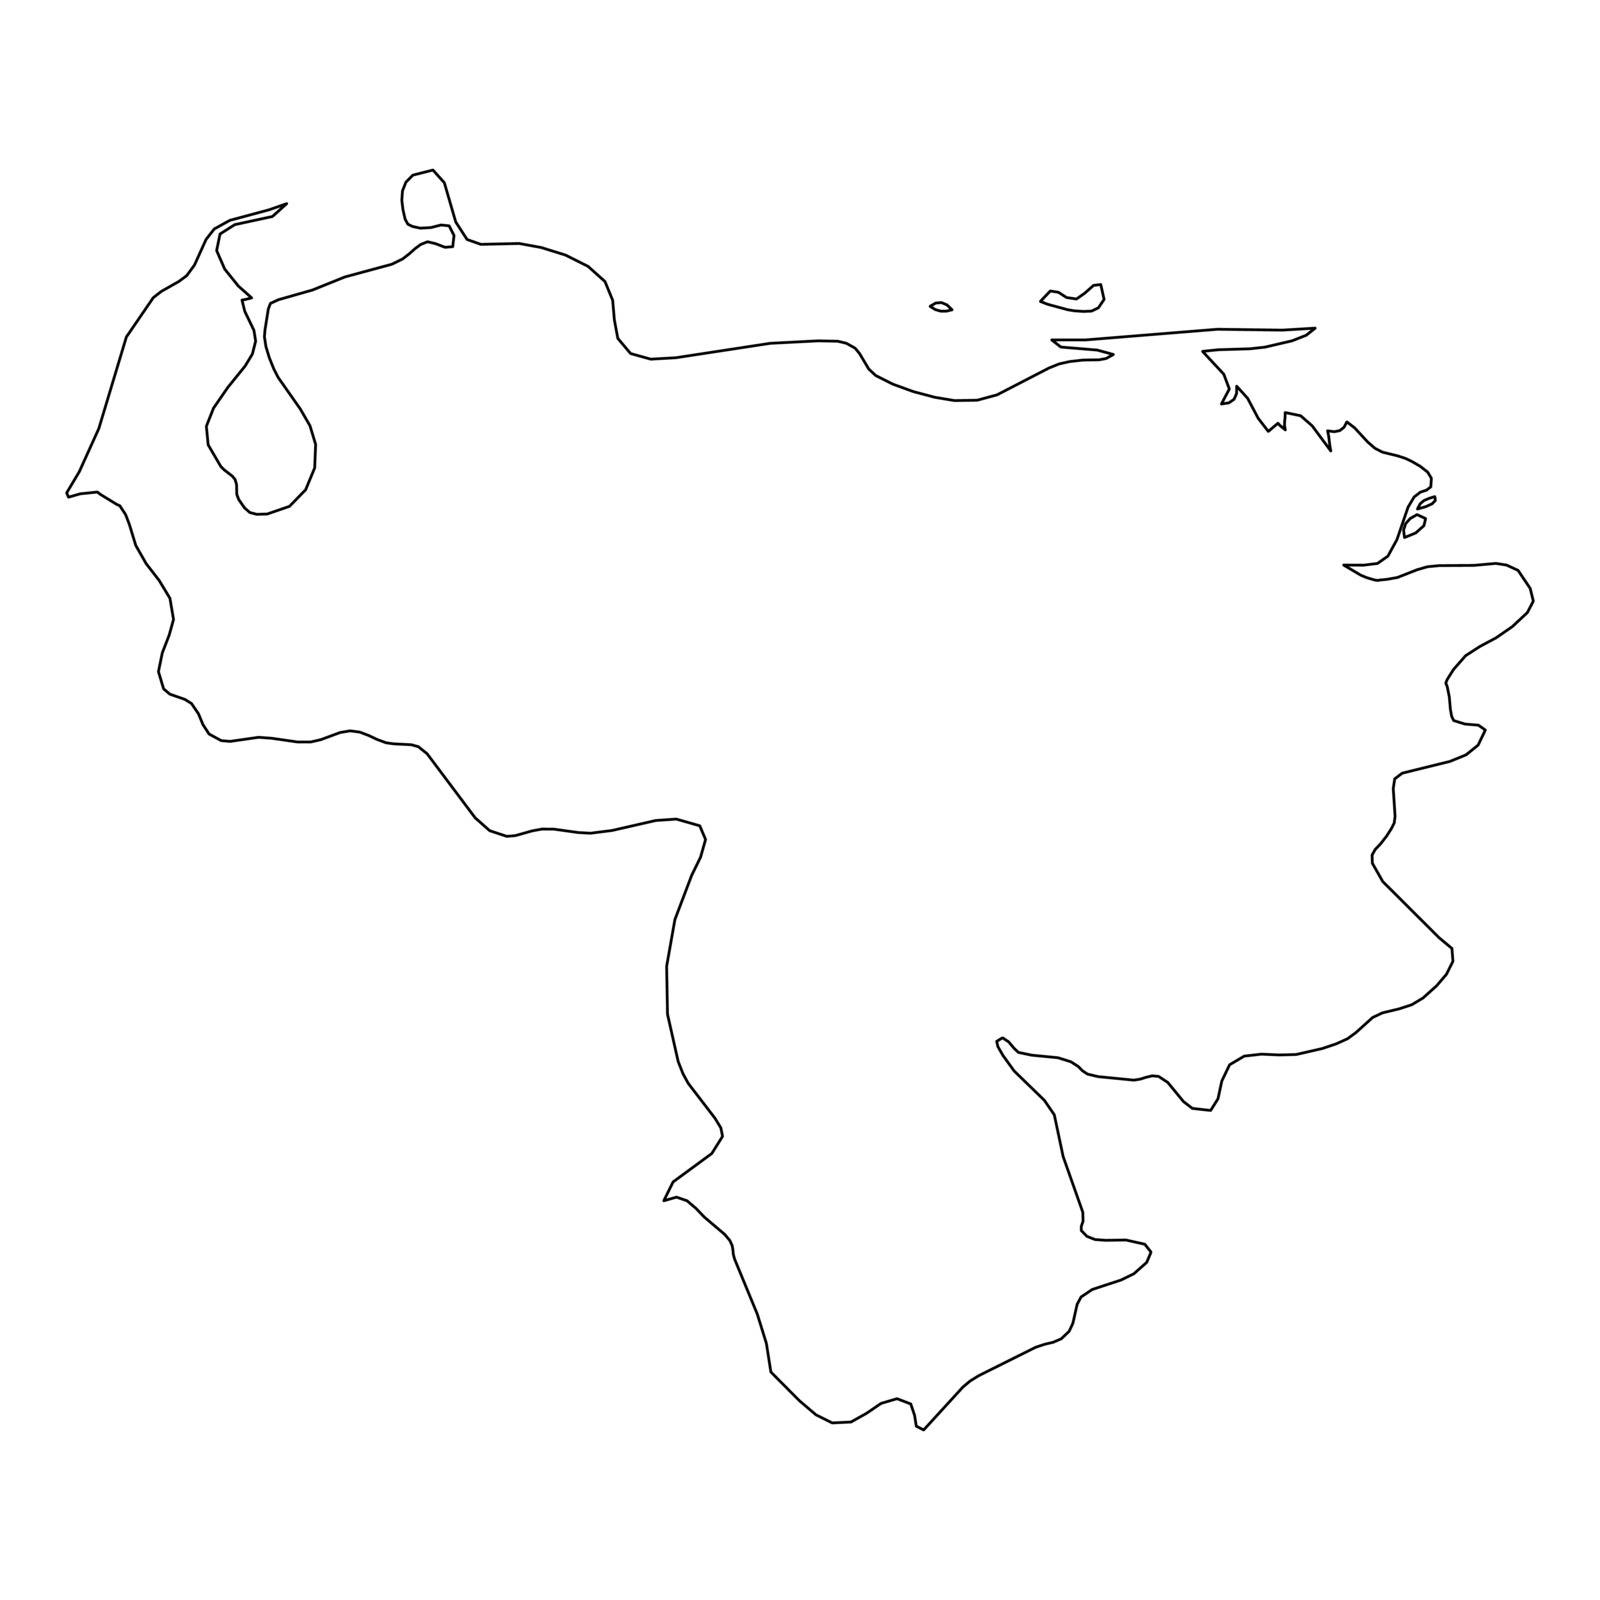 Venezuela - solid black outline border map of country area. Simple flat vector illustration.